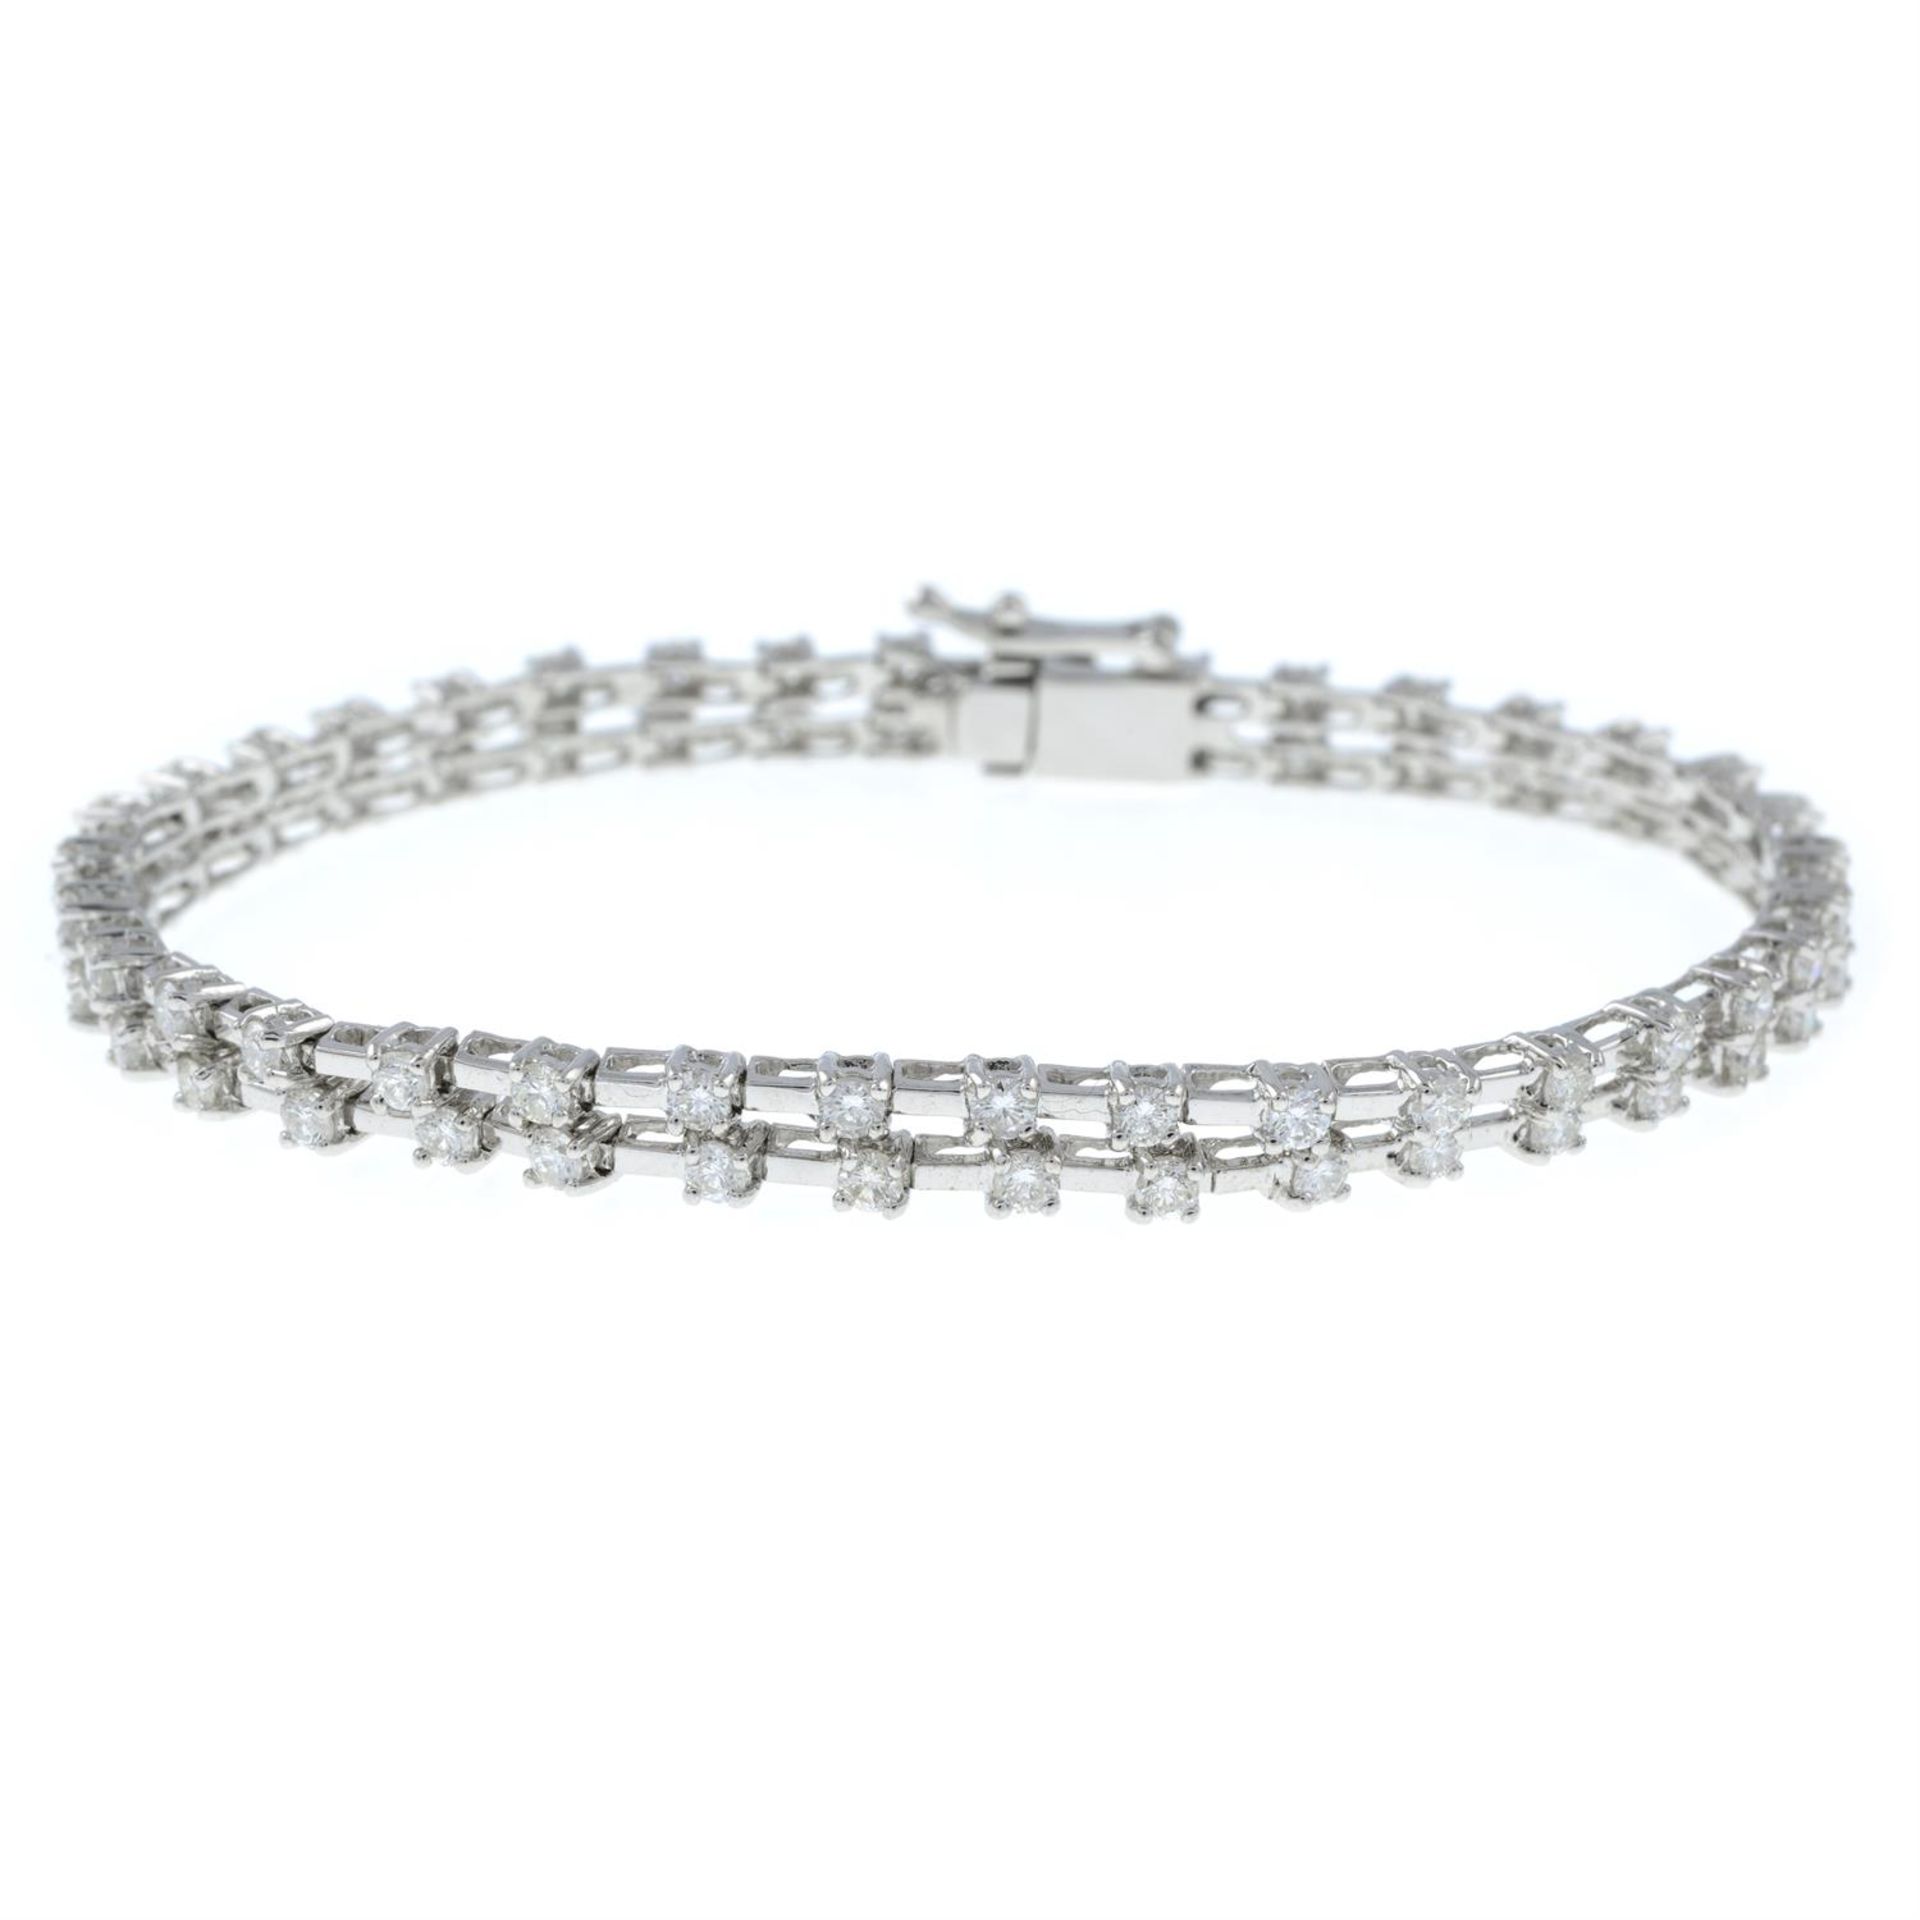 A brilliant-cut diamond double row bracelet.